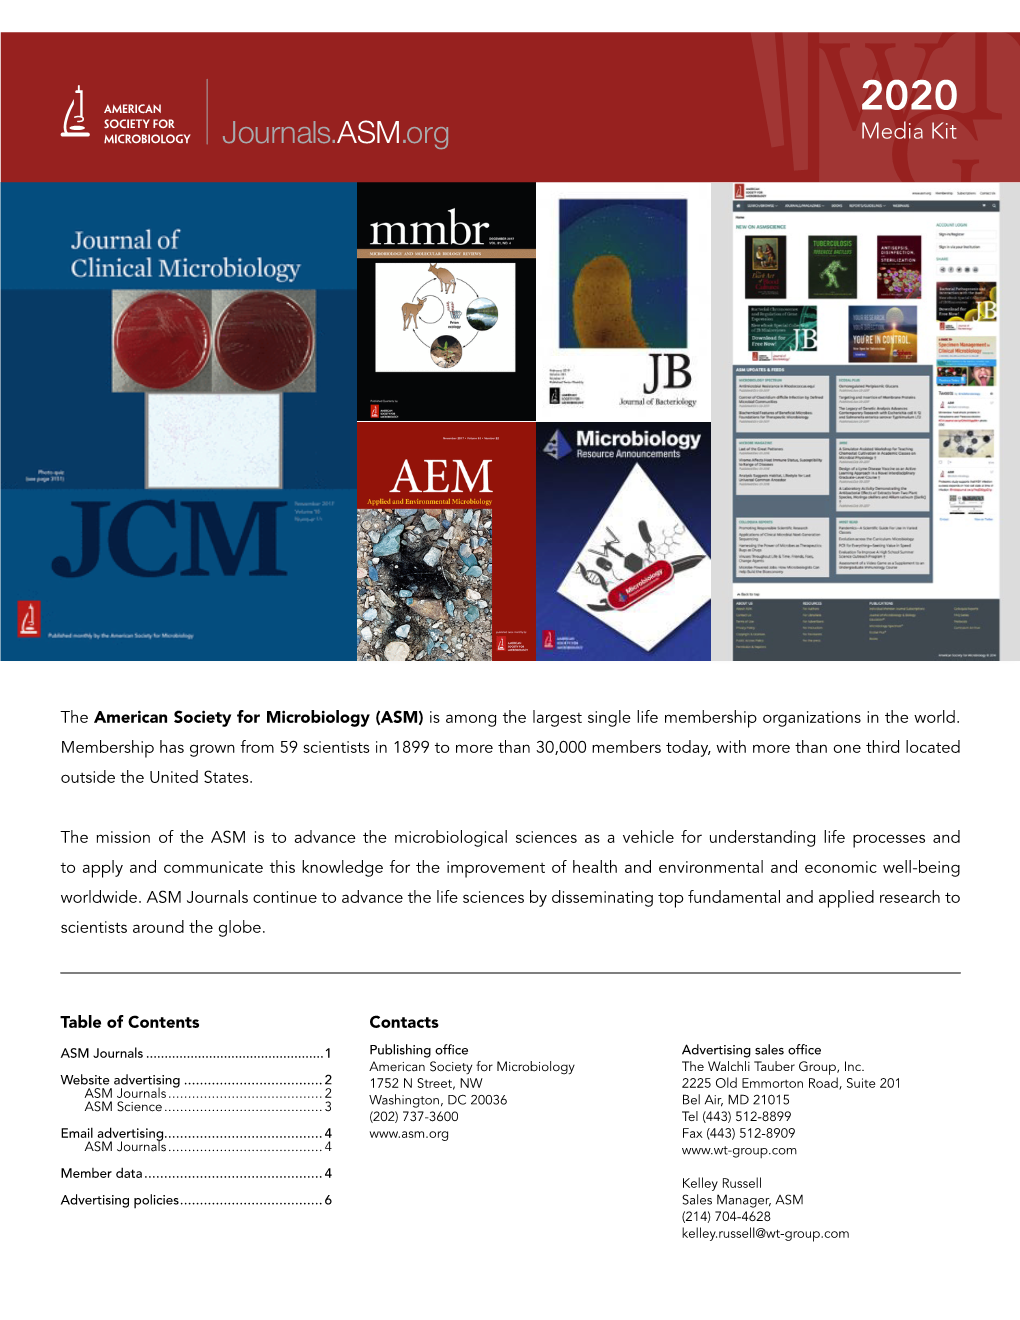 Download the ASM Journals 2020 Media